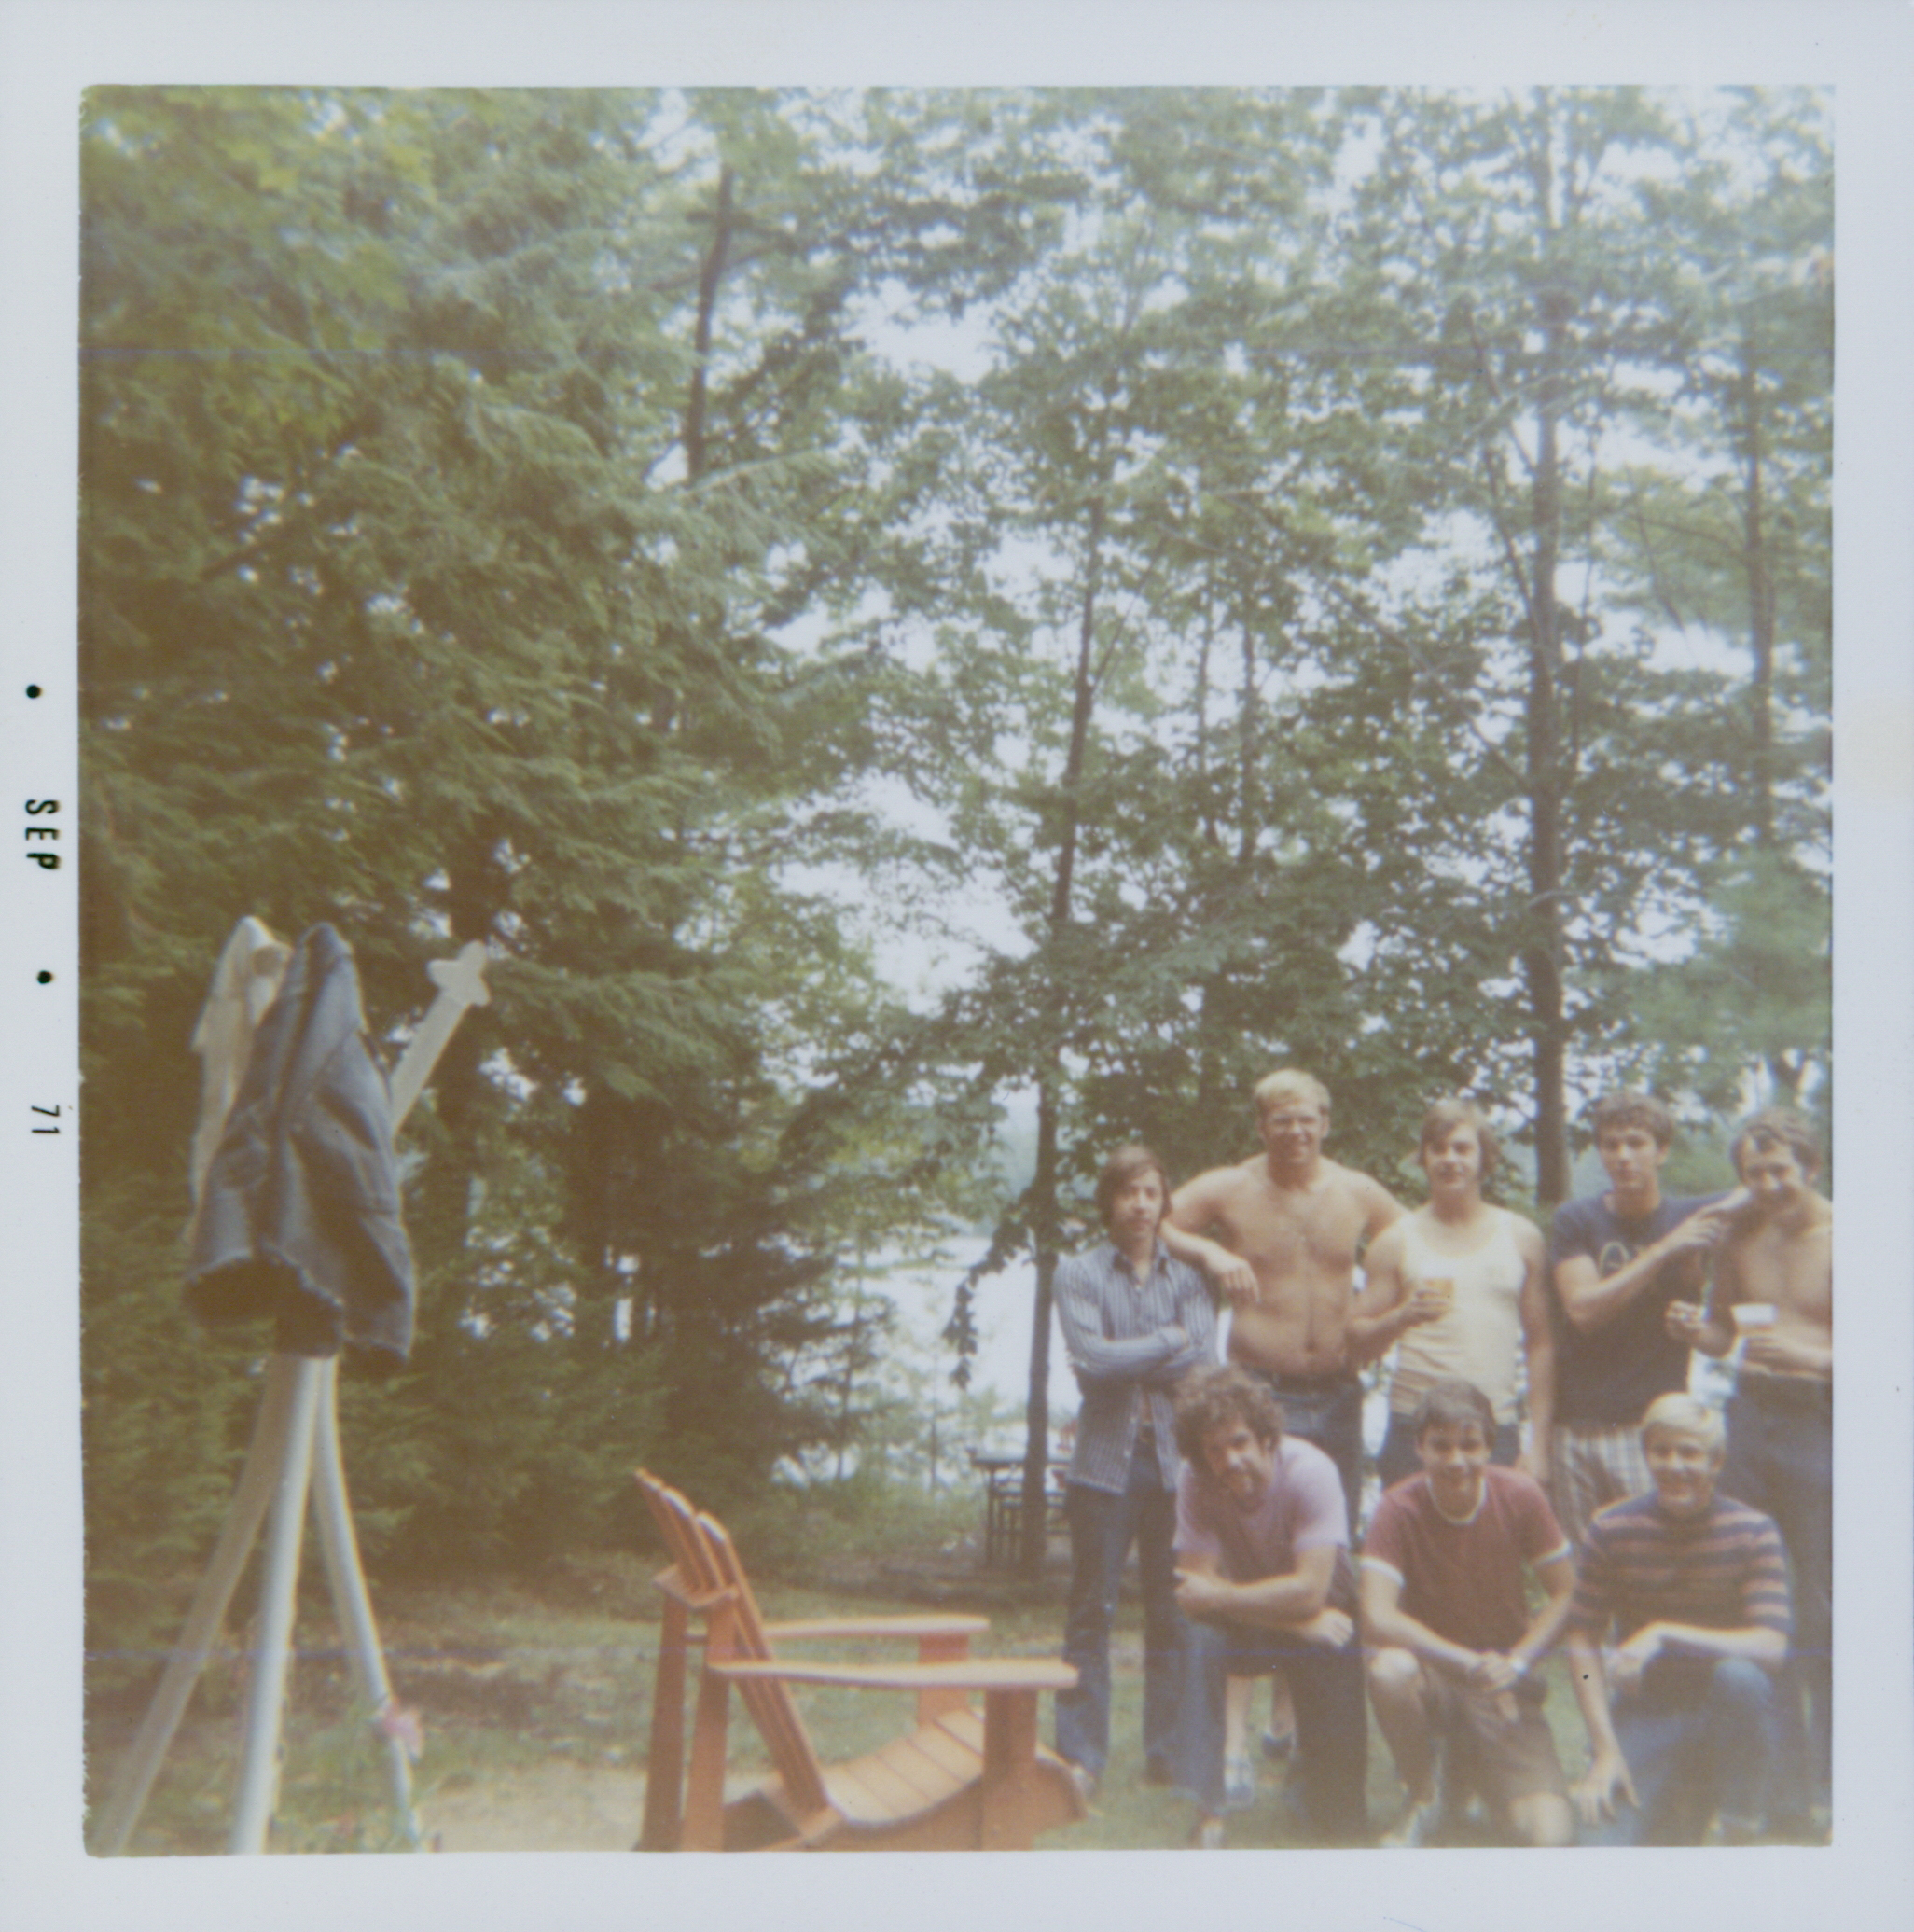 1971 Geoff Evans camp